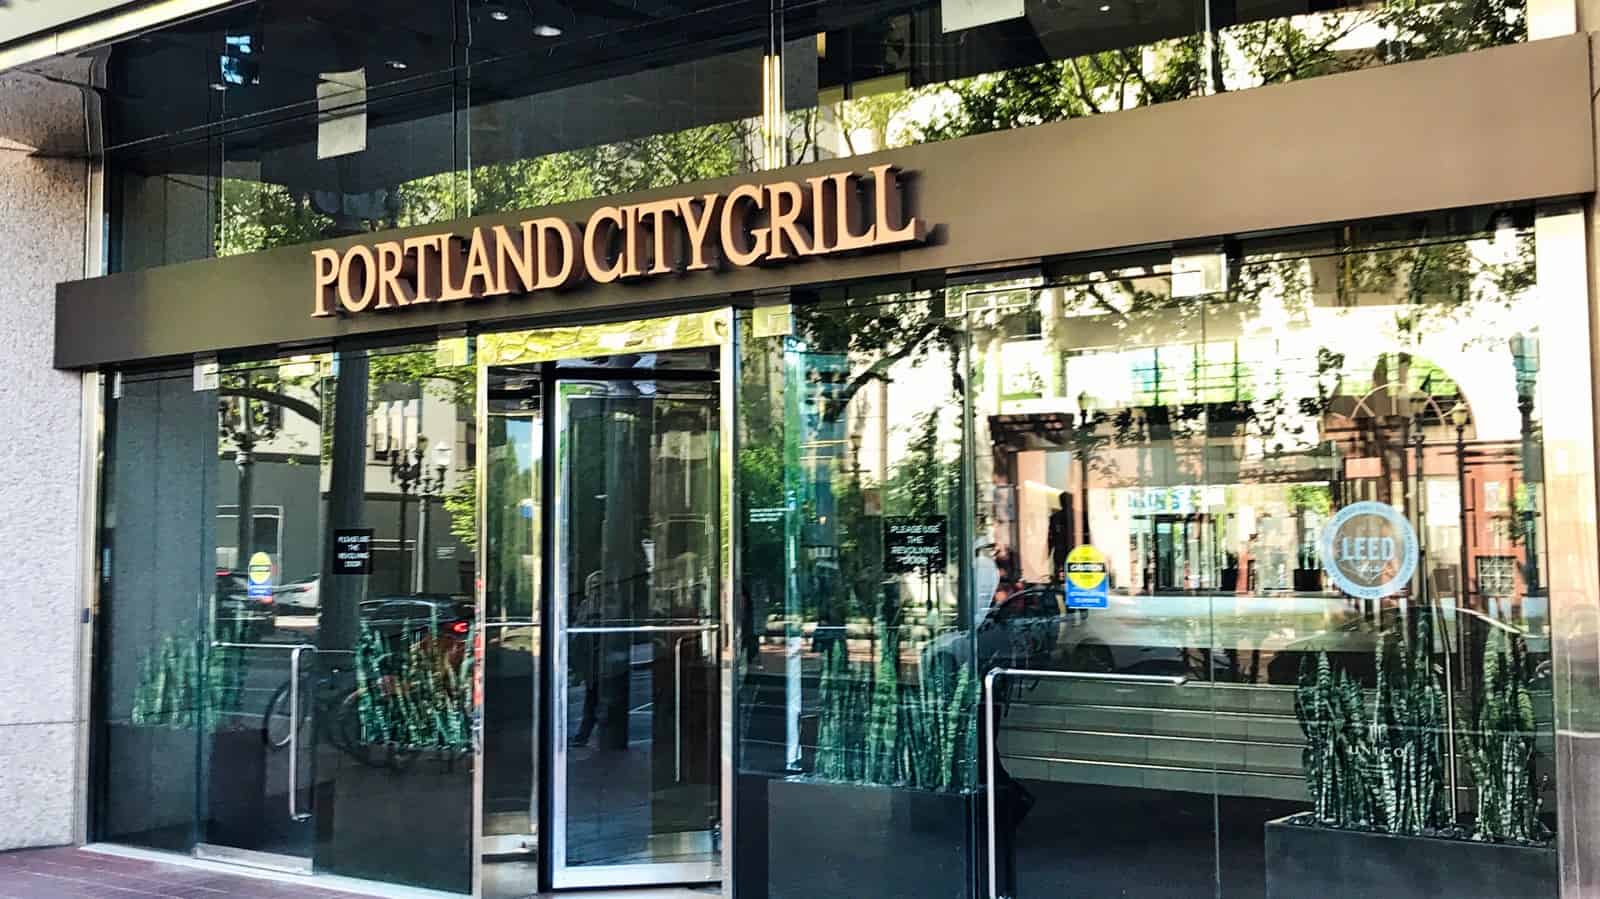 Portland city grill